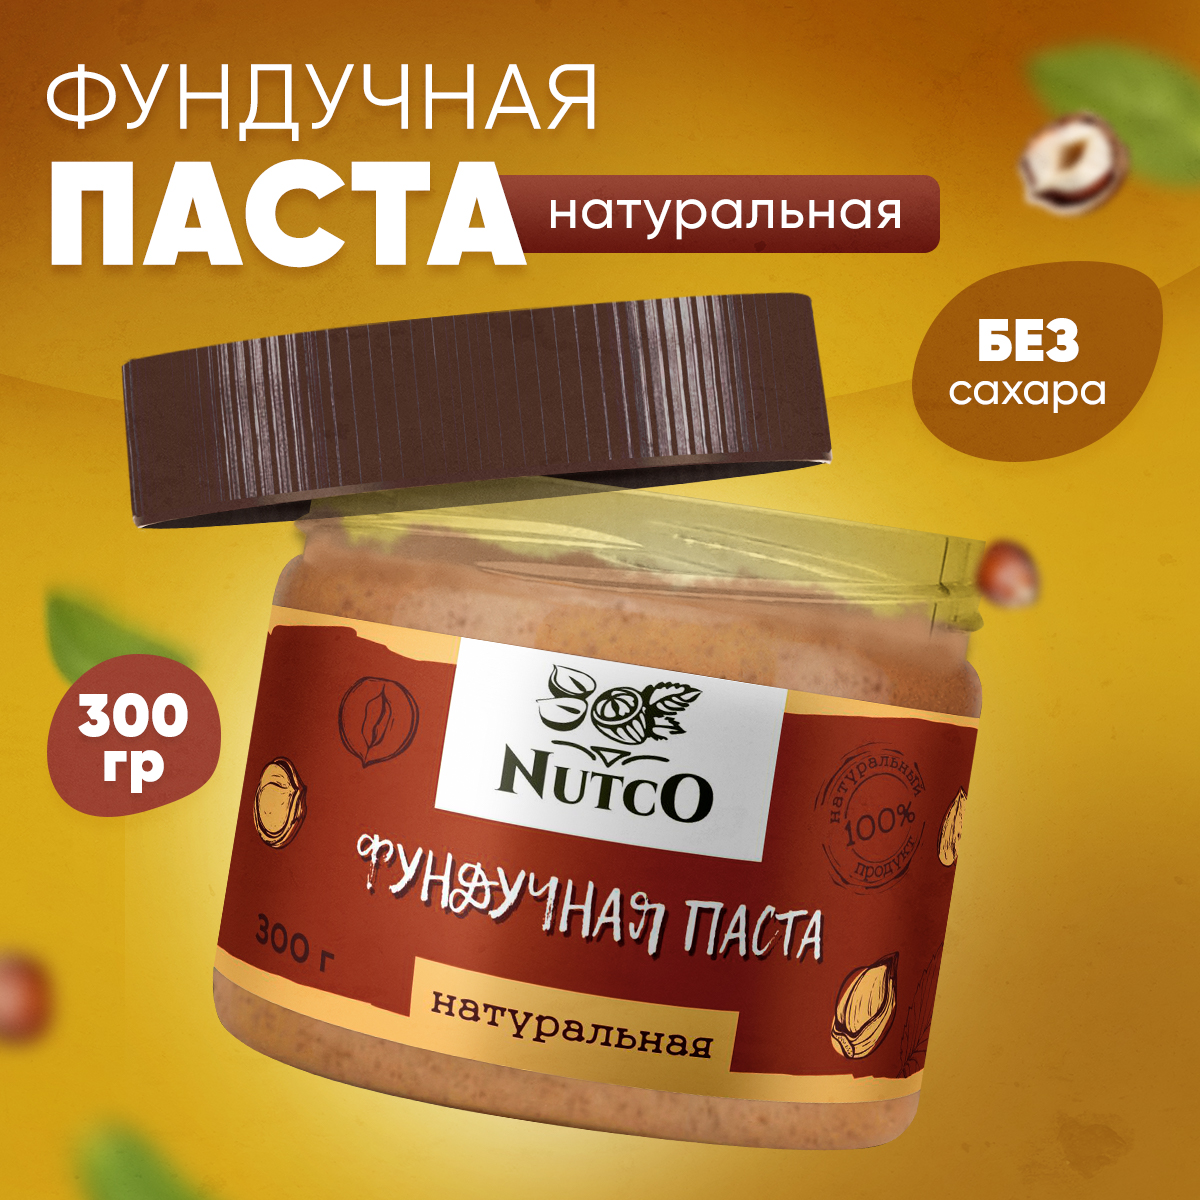 Фундучная паста Nutco натуральная без сахара и добавок - фото 1